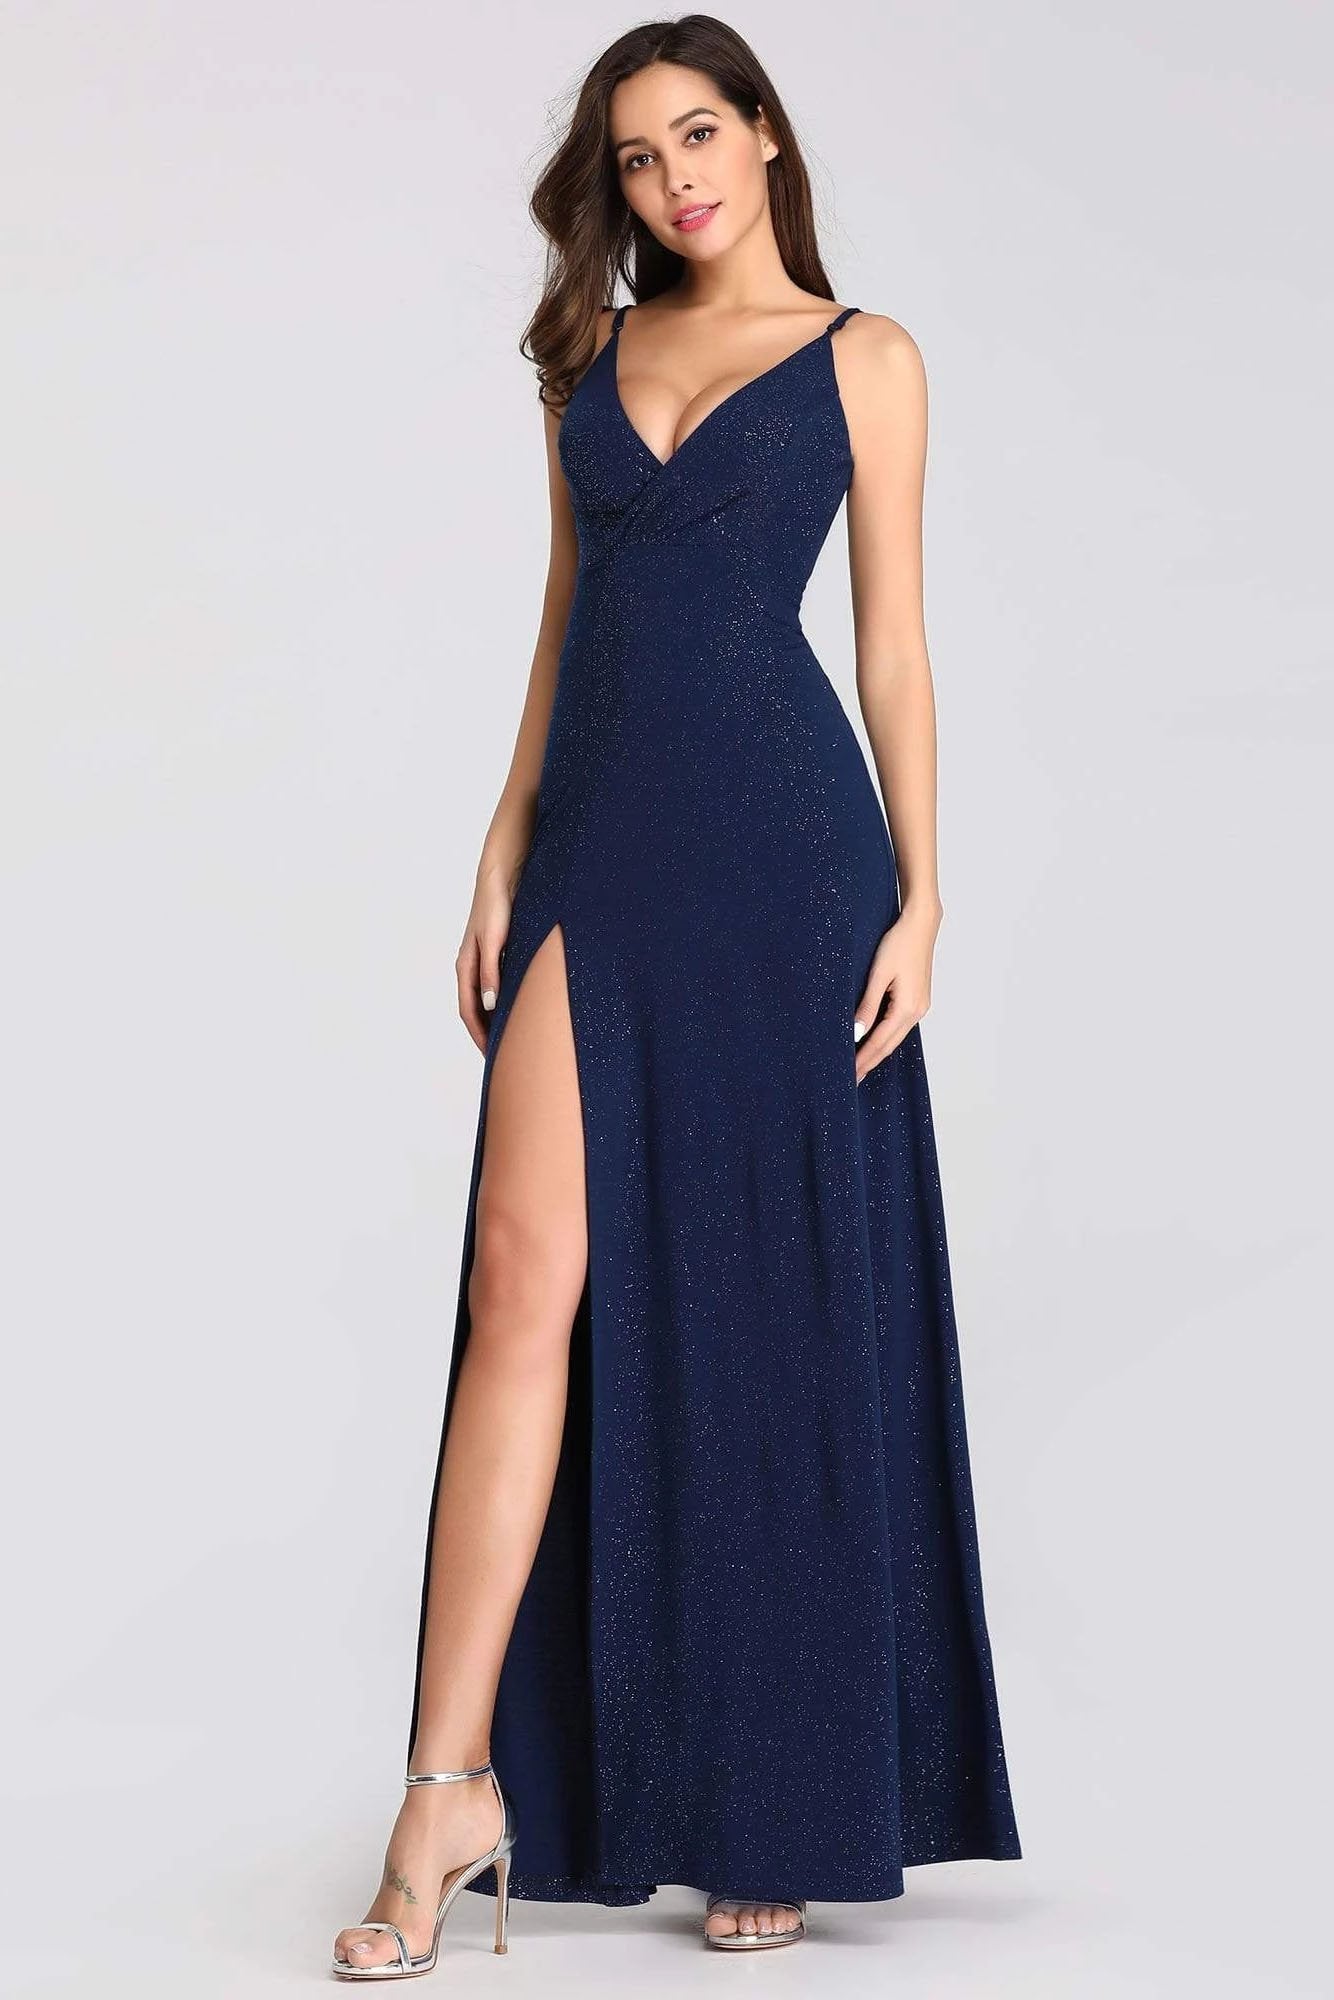 Sexy V Neck Long Spaghetti Straps Mermaid Navy Blue Prom Dresses with High Split STC15366